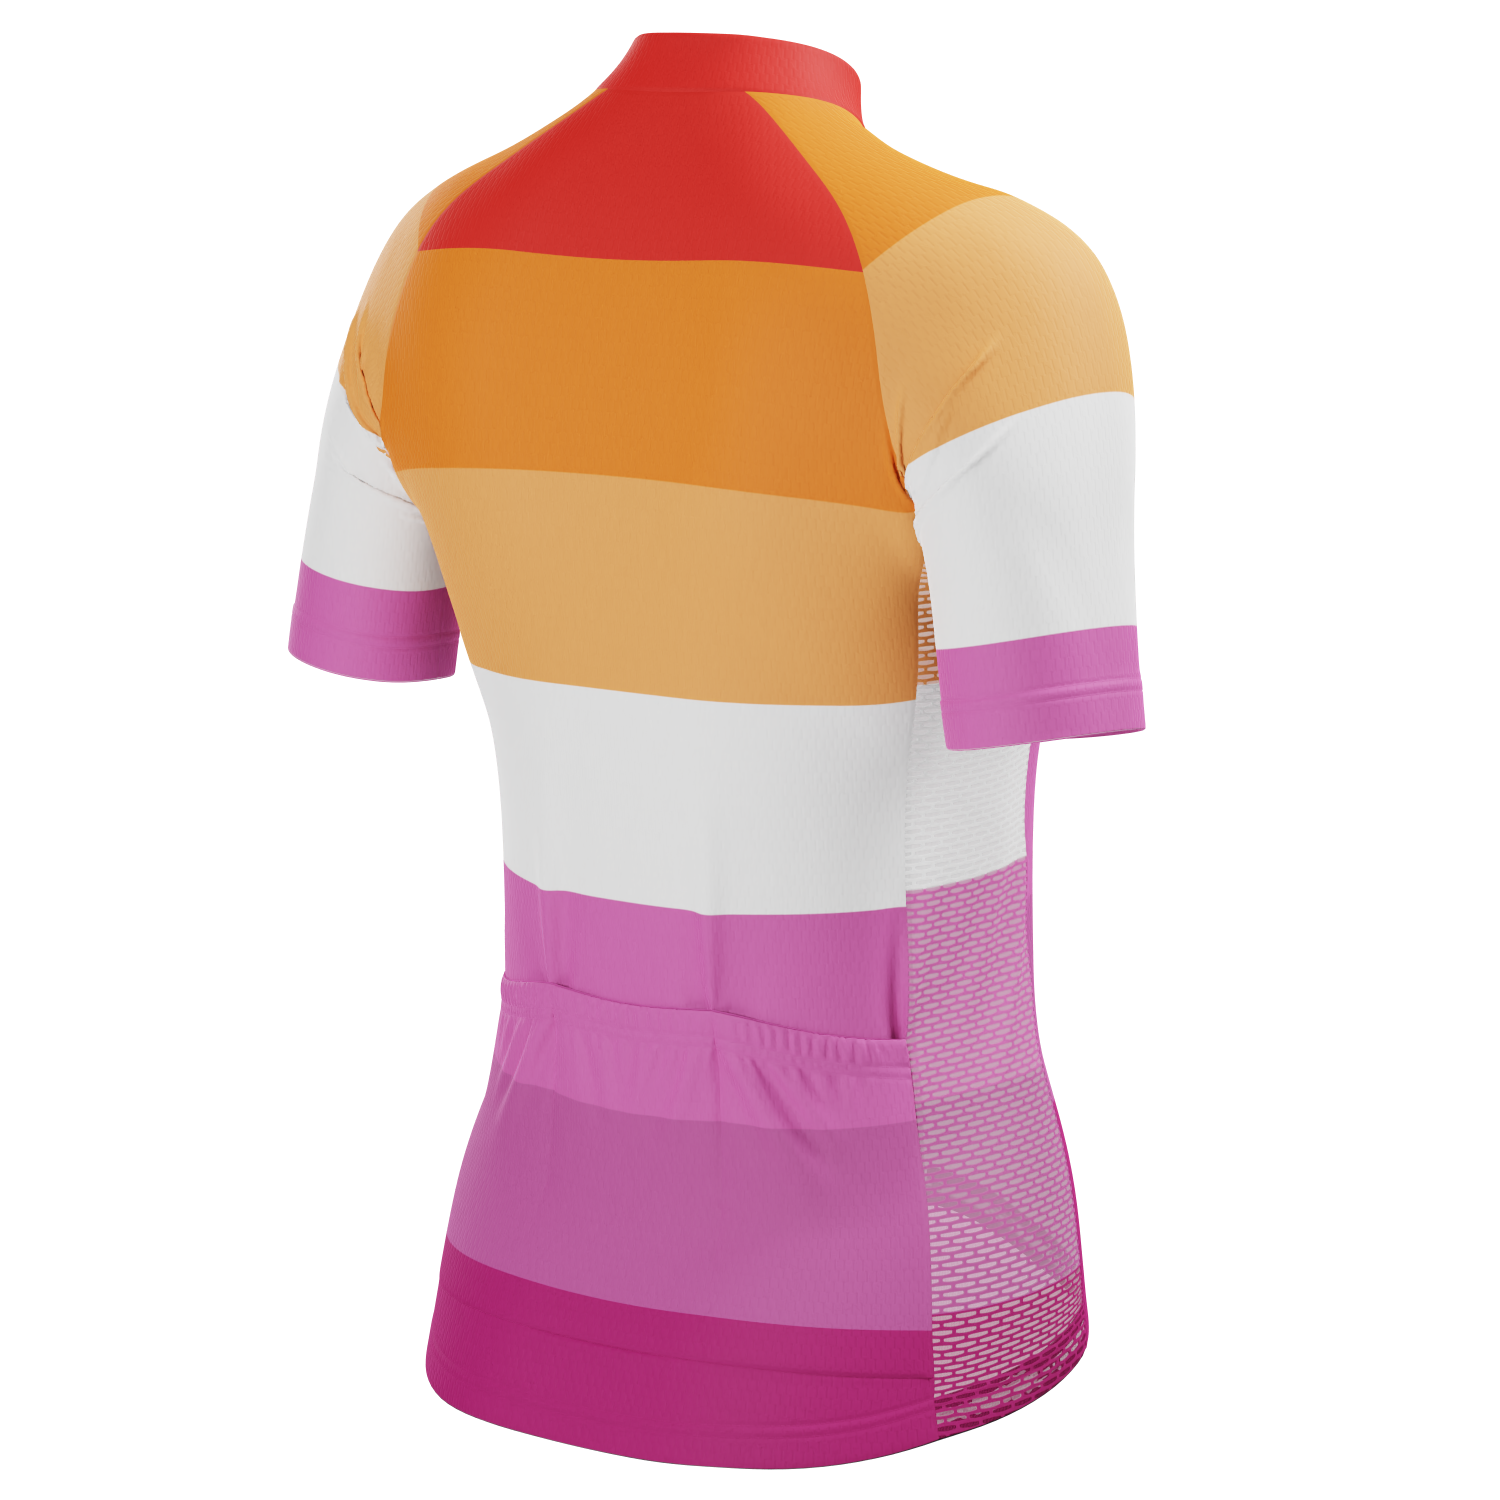 Women's LGBT Lesbian Pride Short Sleeve Cycling Jersey